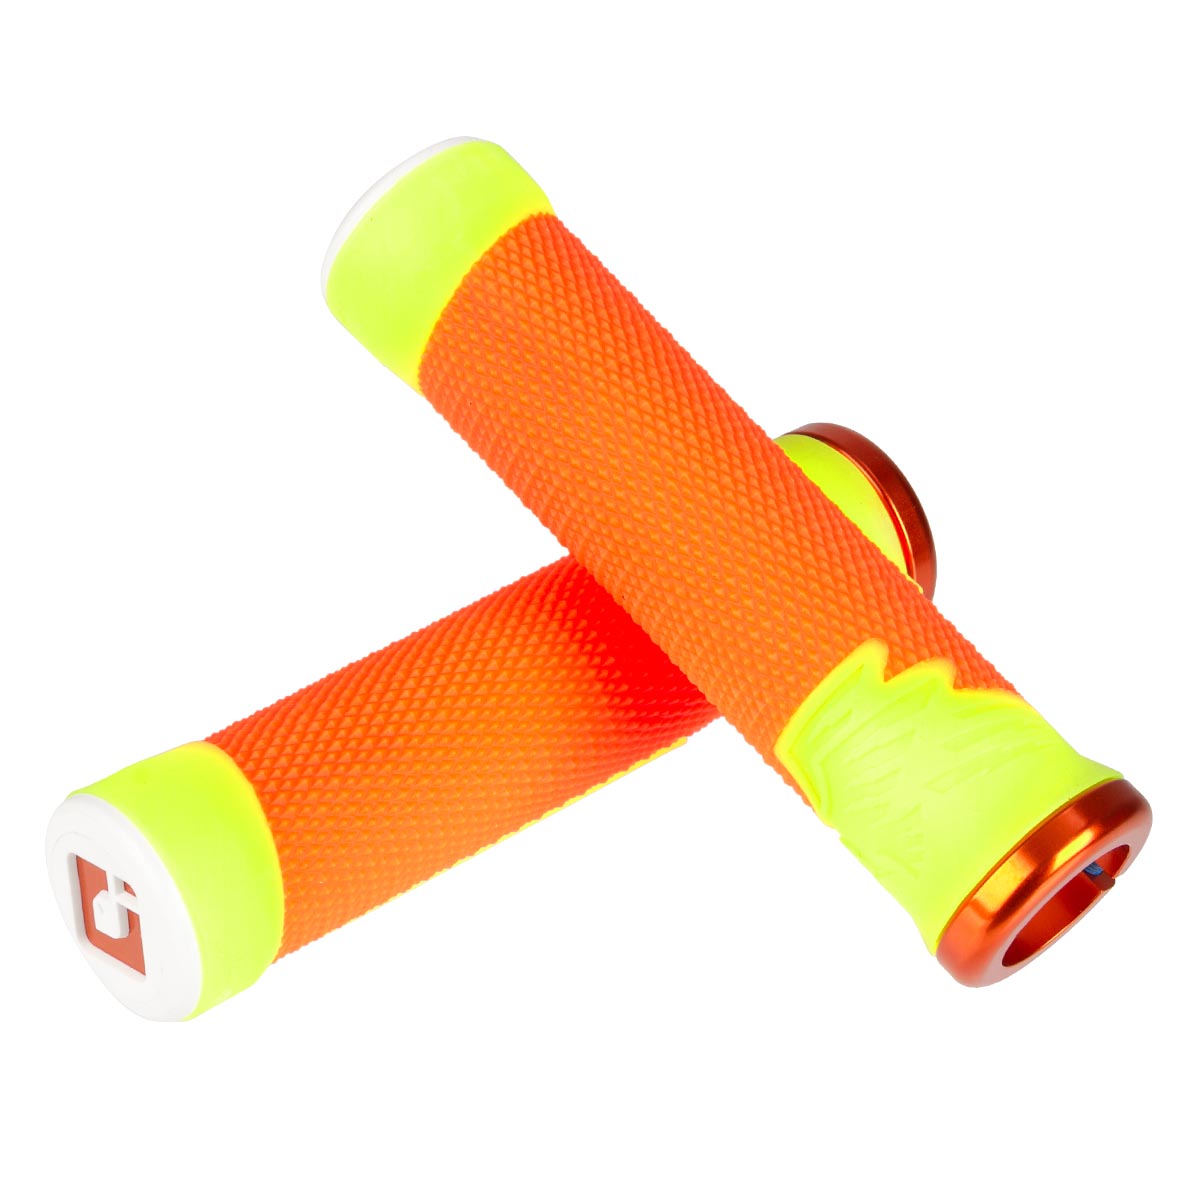 ODI Grips VTT AG-2 Lock-On Neon Orange/Neon Yellow - 135 mm